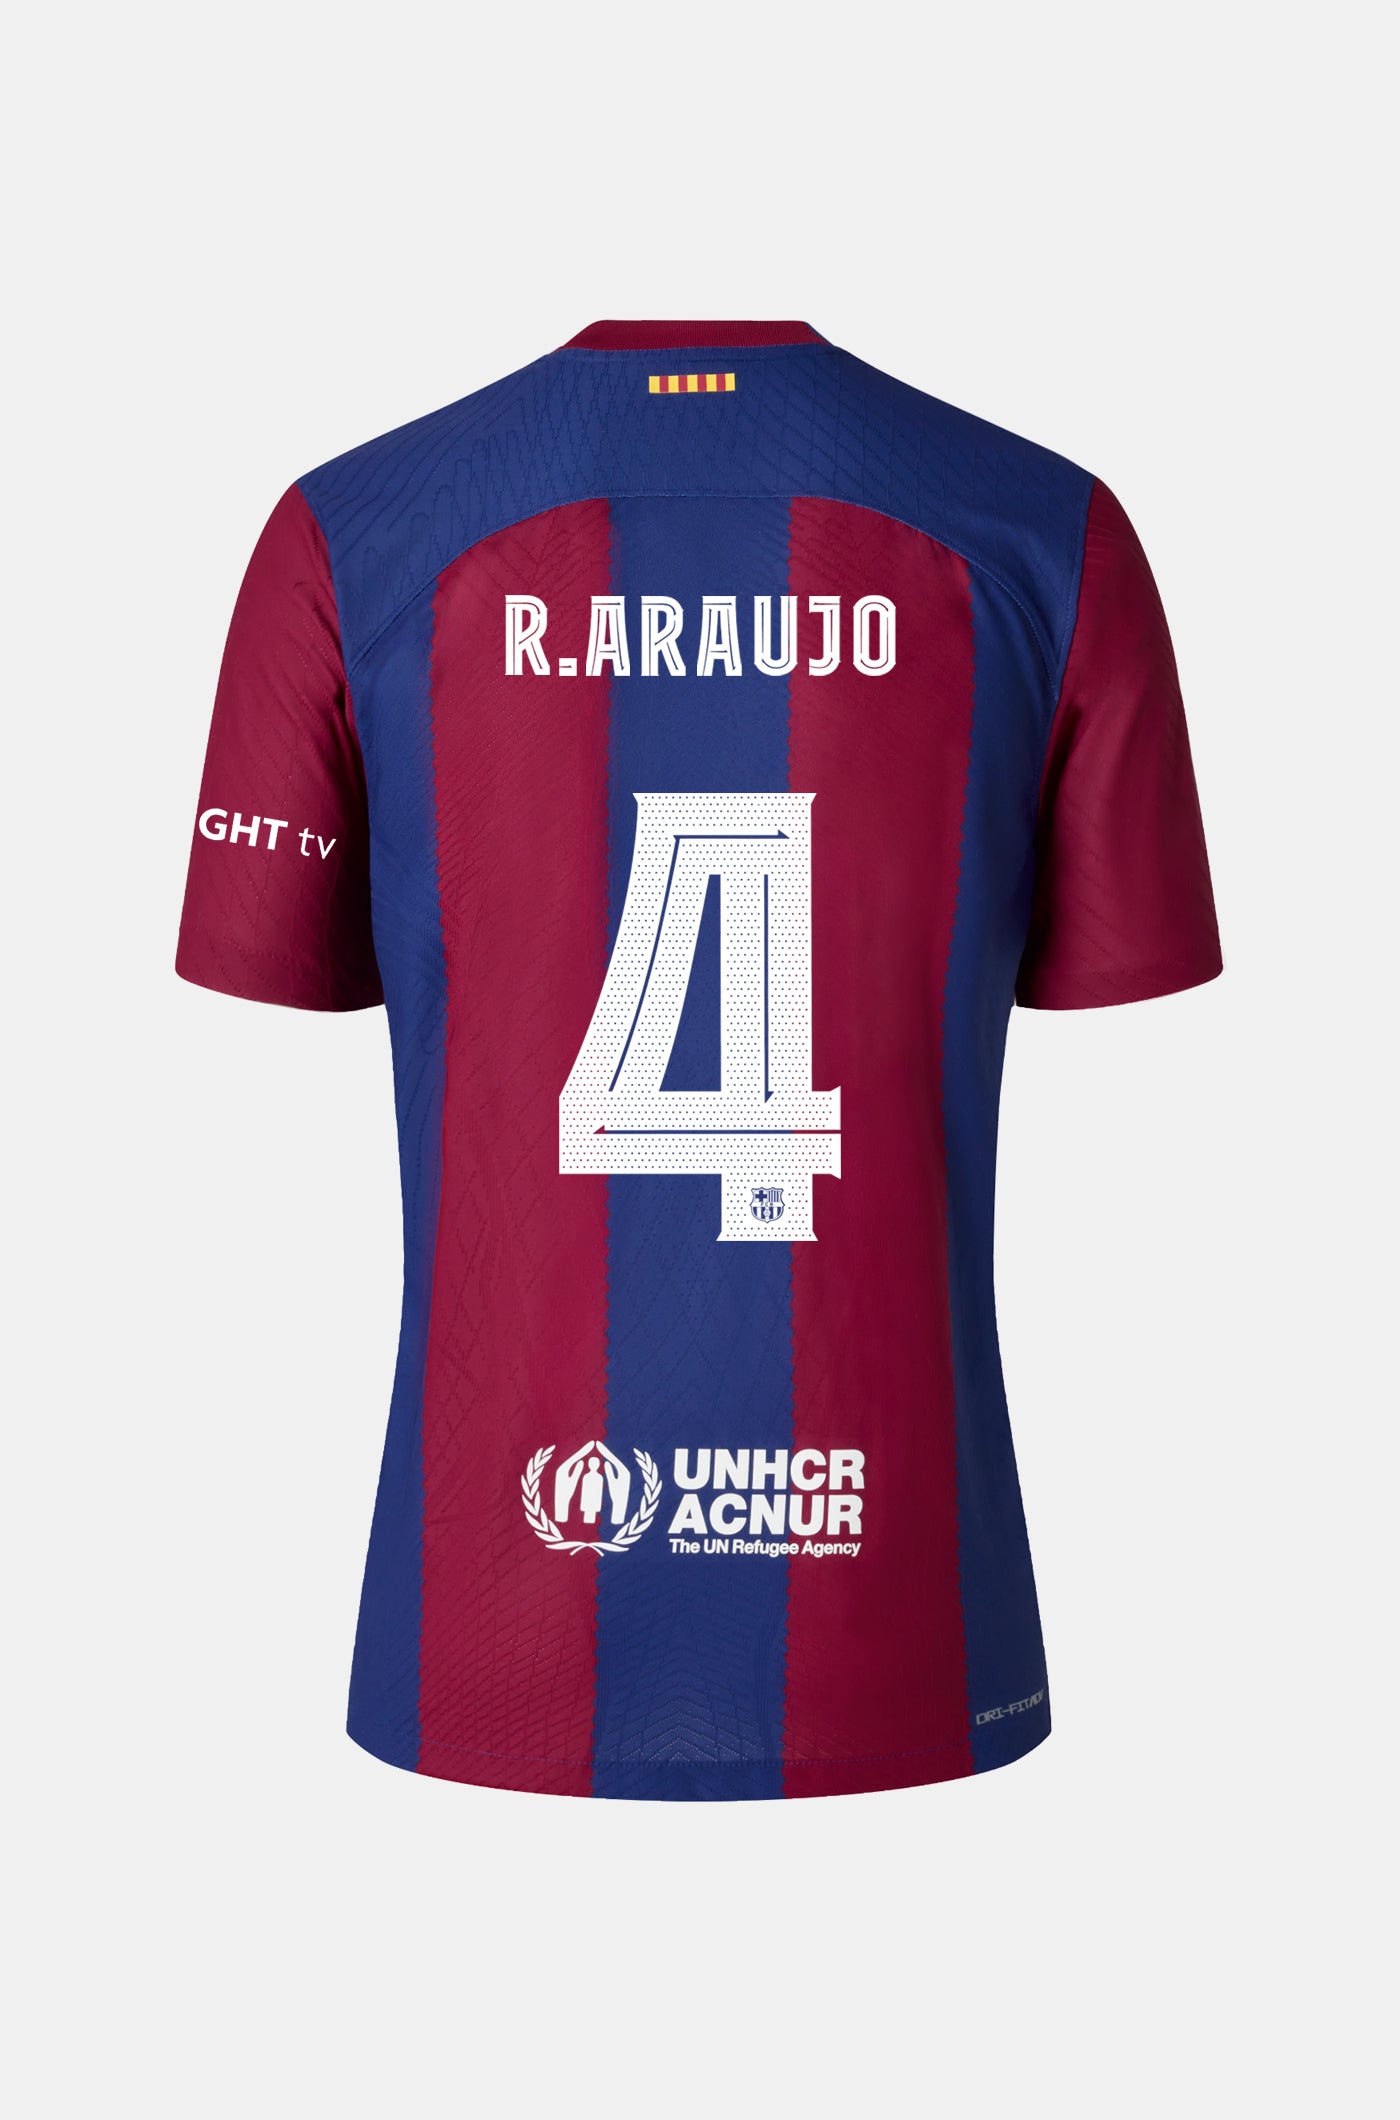 FC Barcelona home shirt 23/24 - Long-sleeve Player's Edition - R. ARAUJO